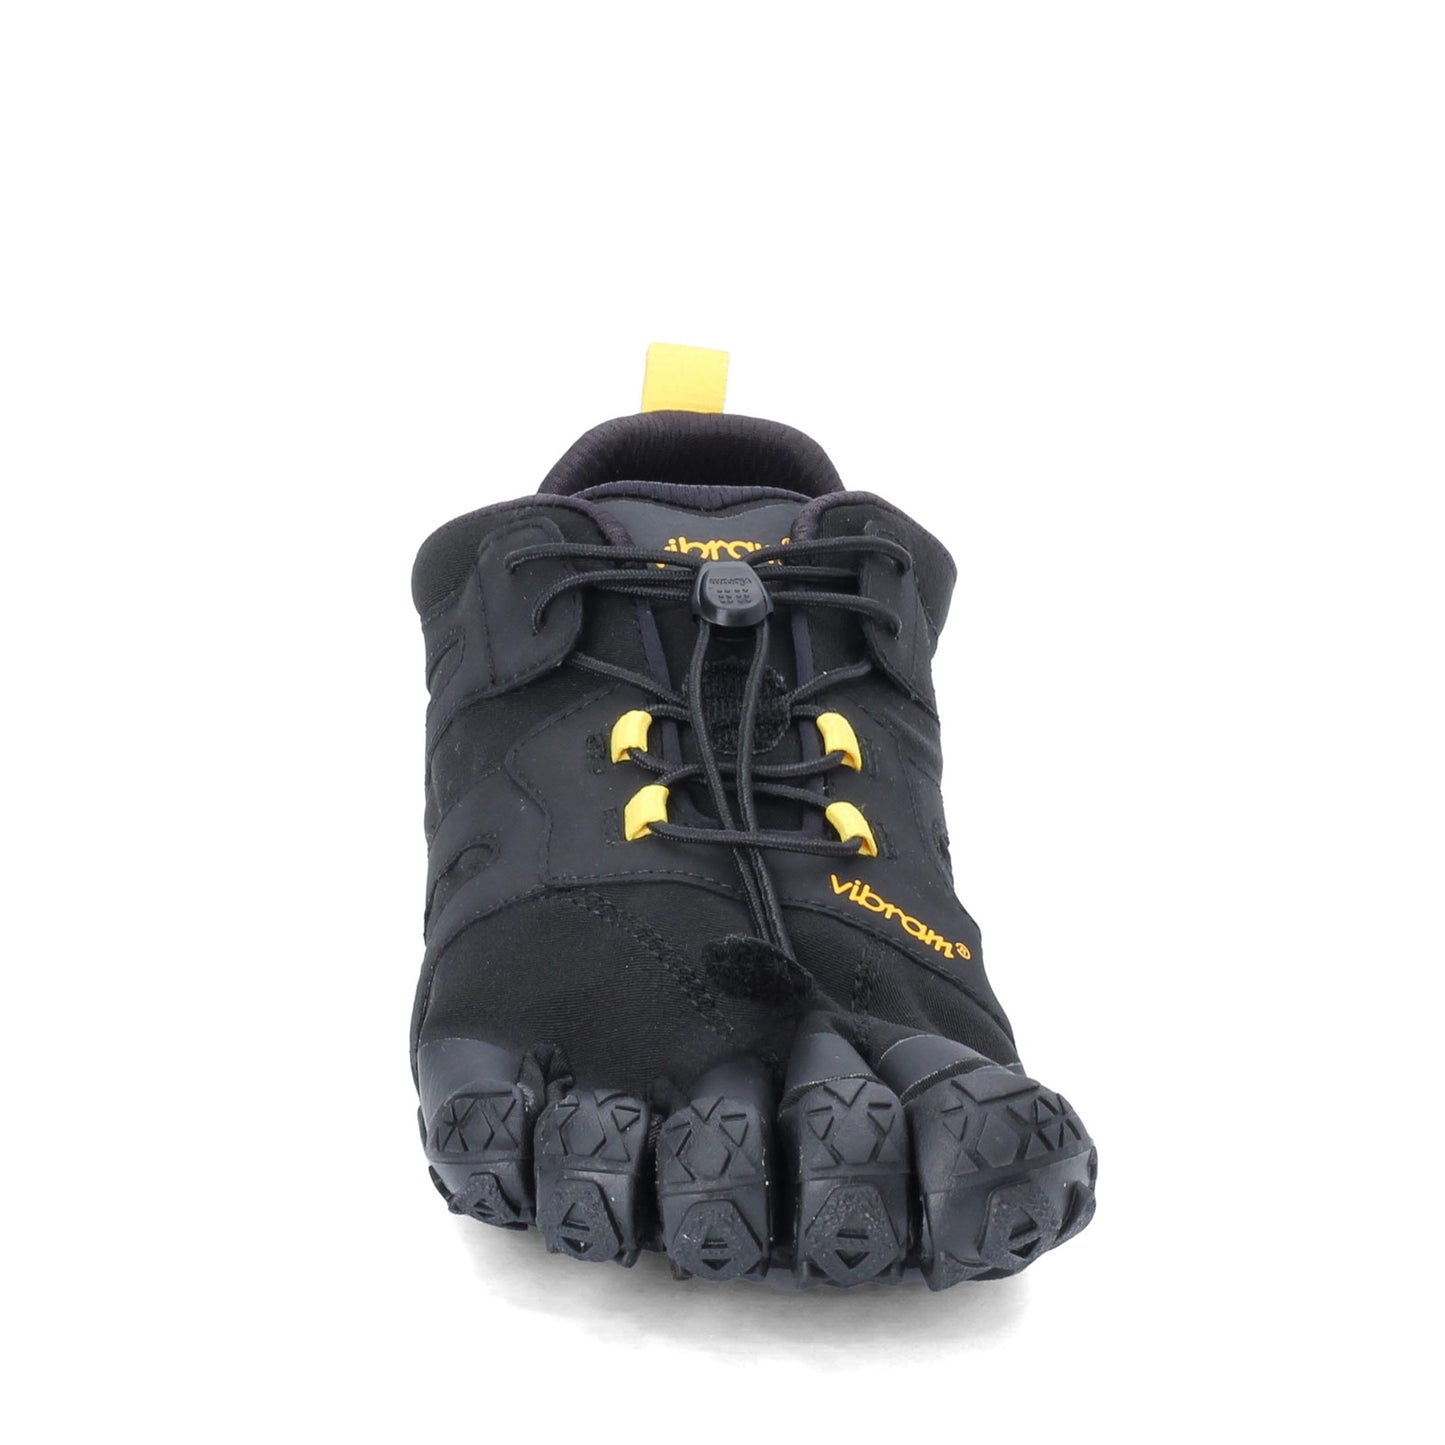 Peltz Shoes  Men's Vibram FiveFingers V-Trail 2.0 Running Shoe BLACK YELLOW 19M7601